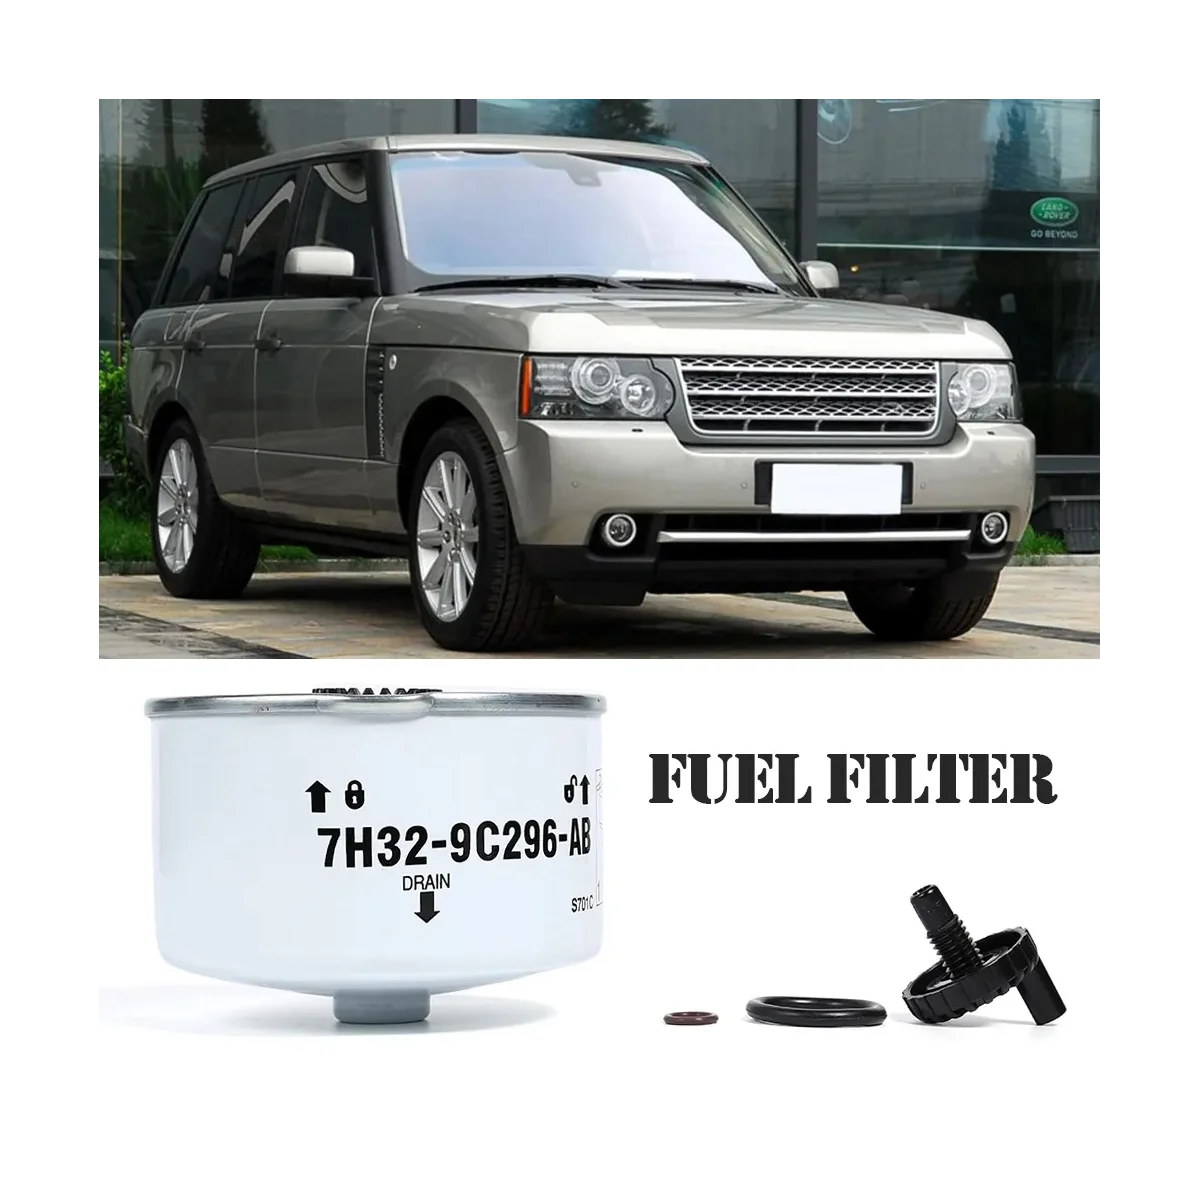 

Fuel Filter LR009705 for Land Rover Range Rover Sport 2007-2013 Discovery 3/4 LR3 LR4 WJI500020 7H32-9C296-AB